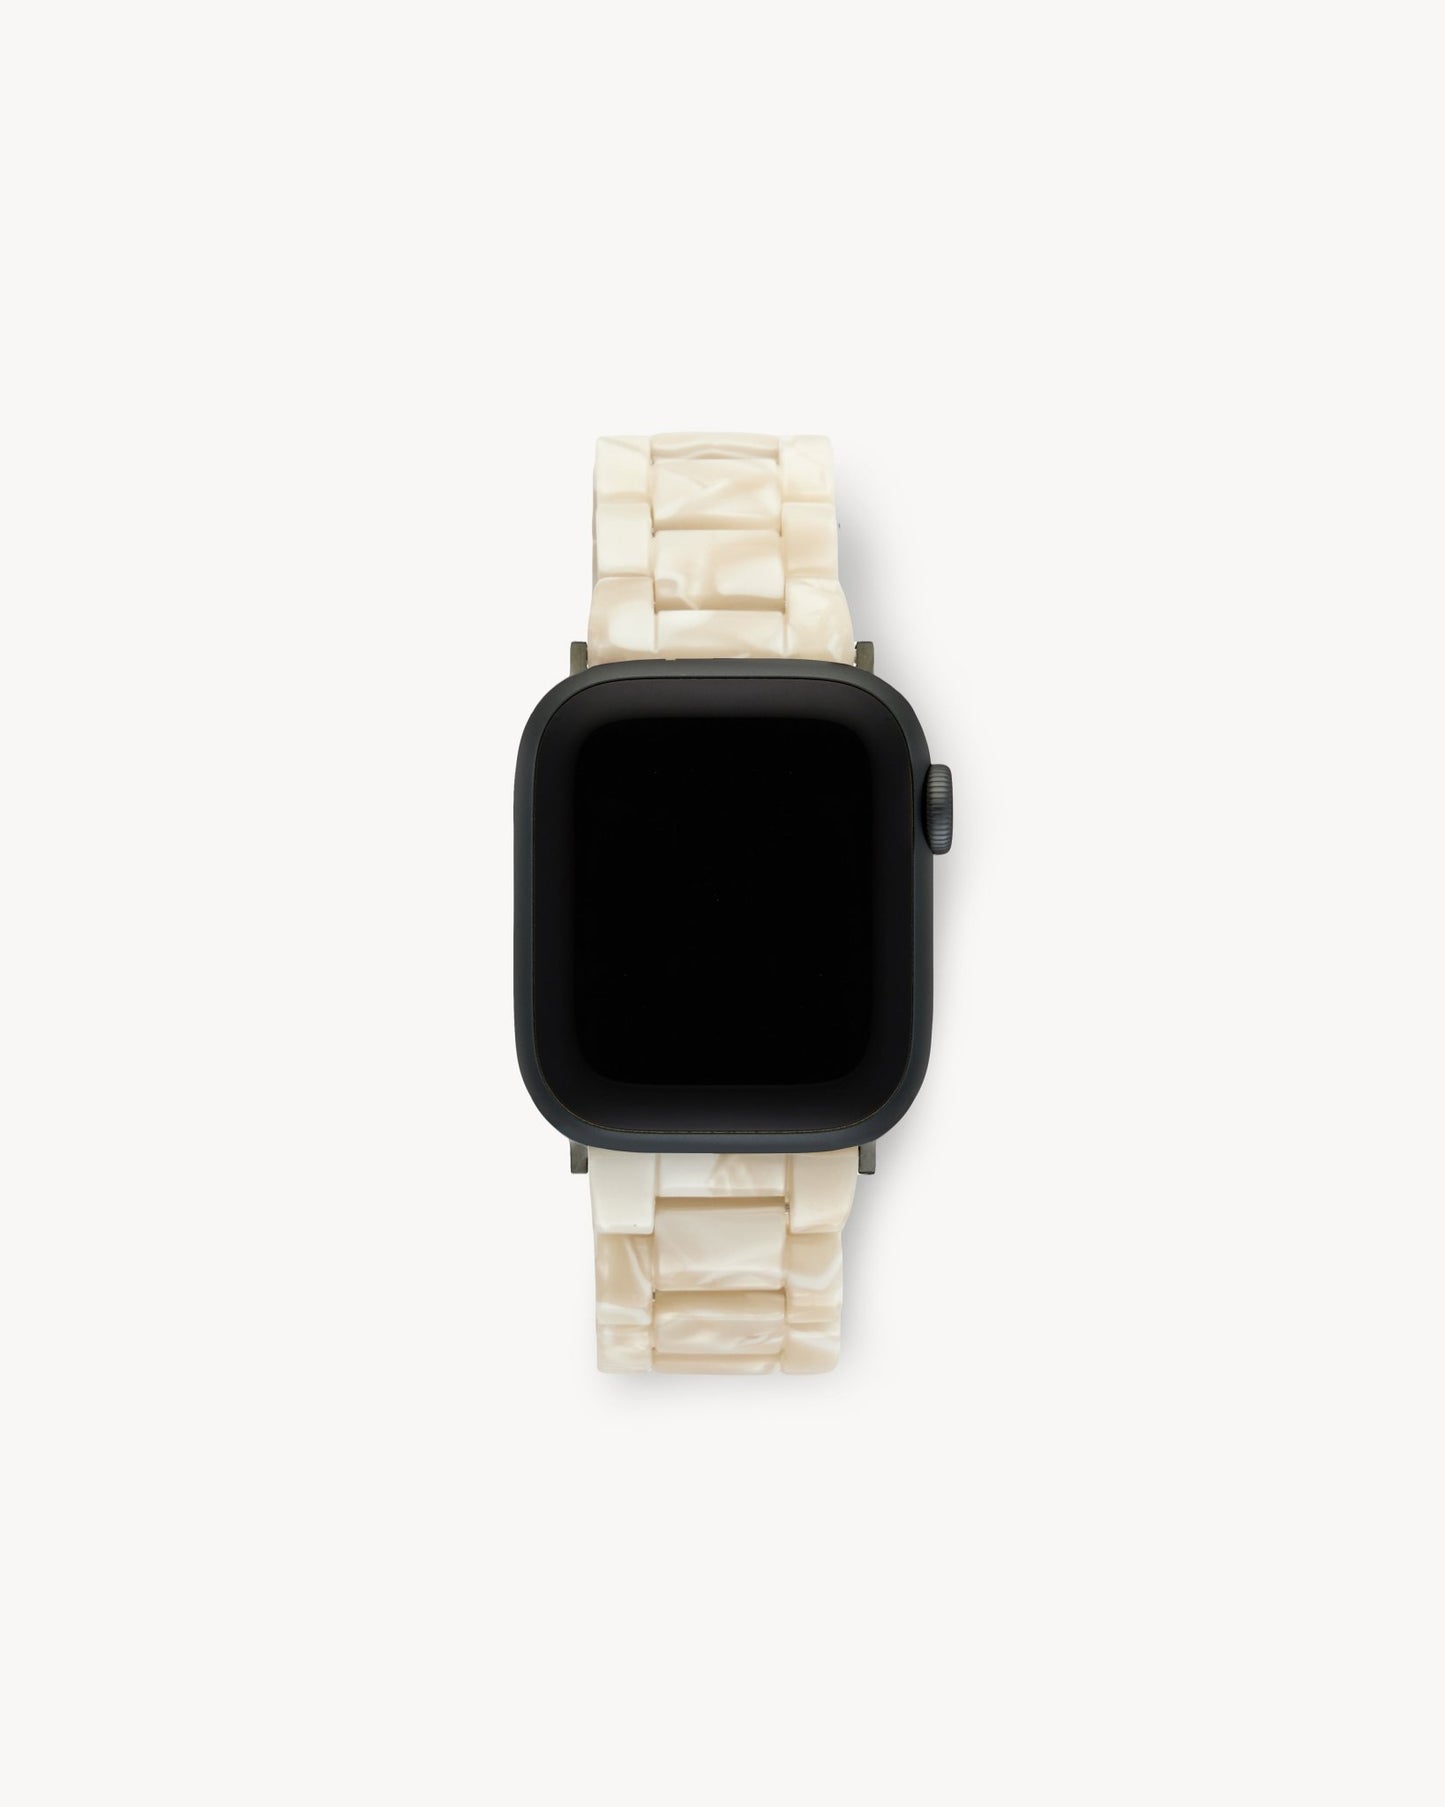 MACHETE Apple Watch Band in Ivory